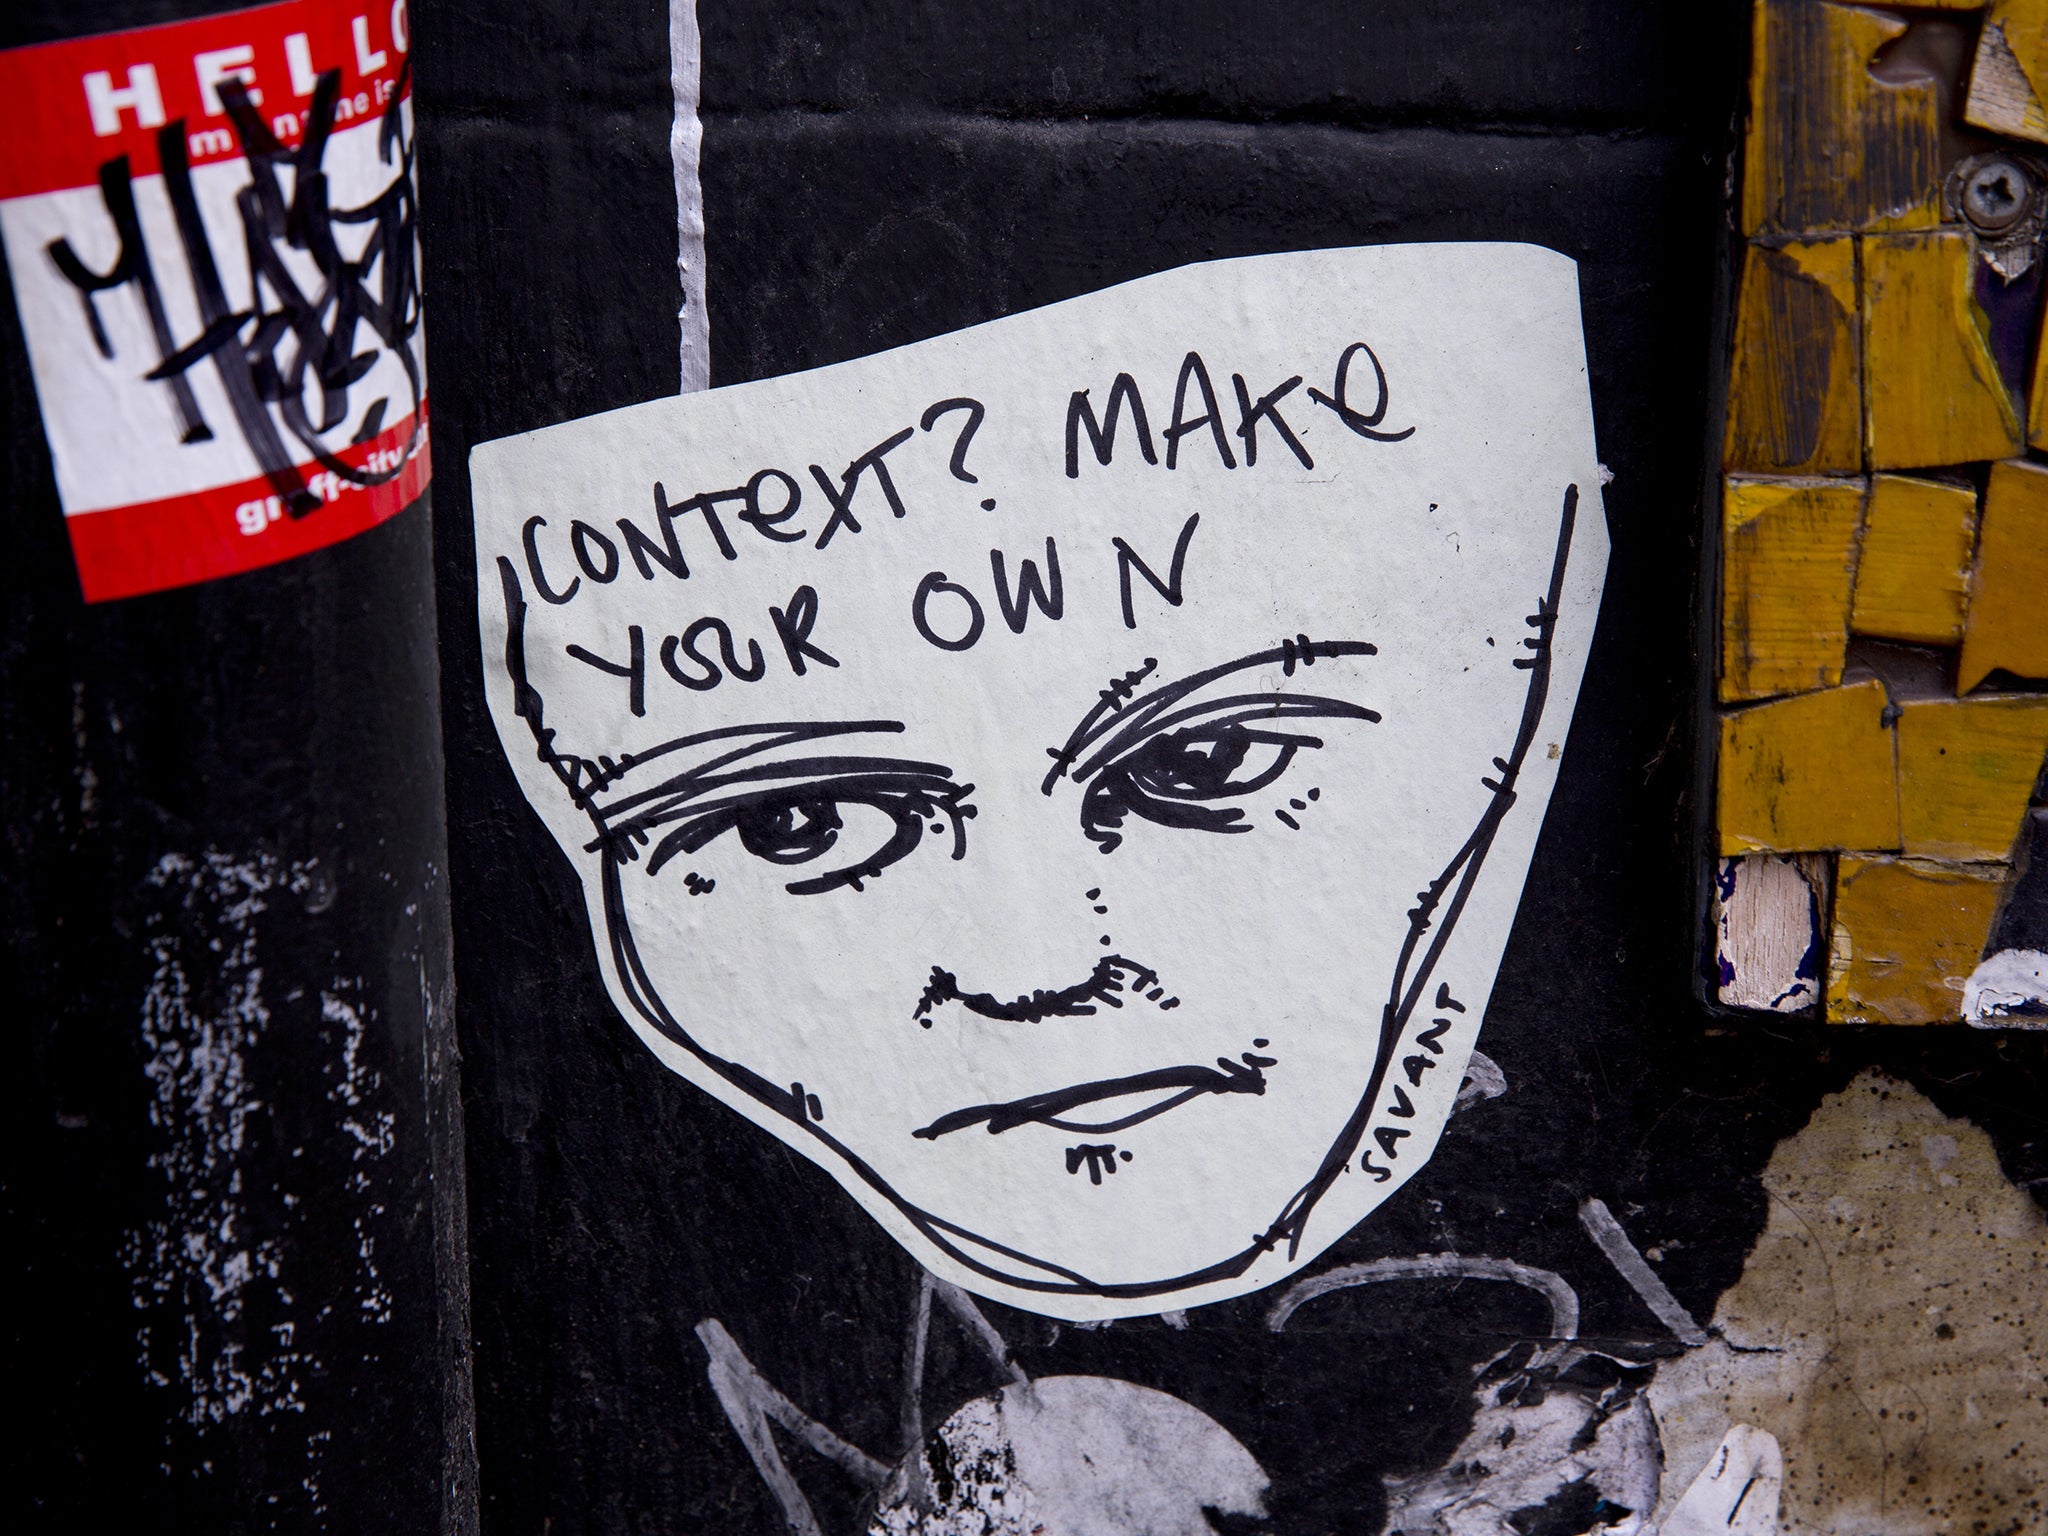 Hipster culture around East London: graffiti on Brick Lane, E1